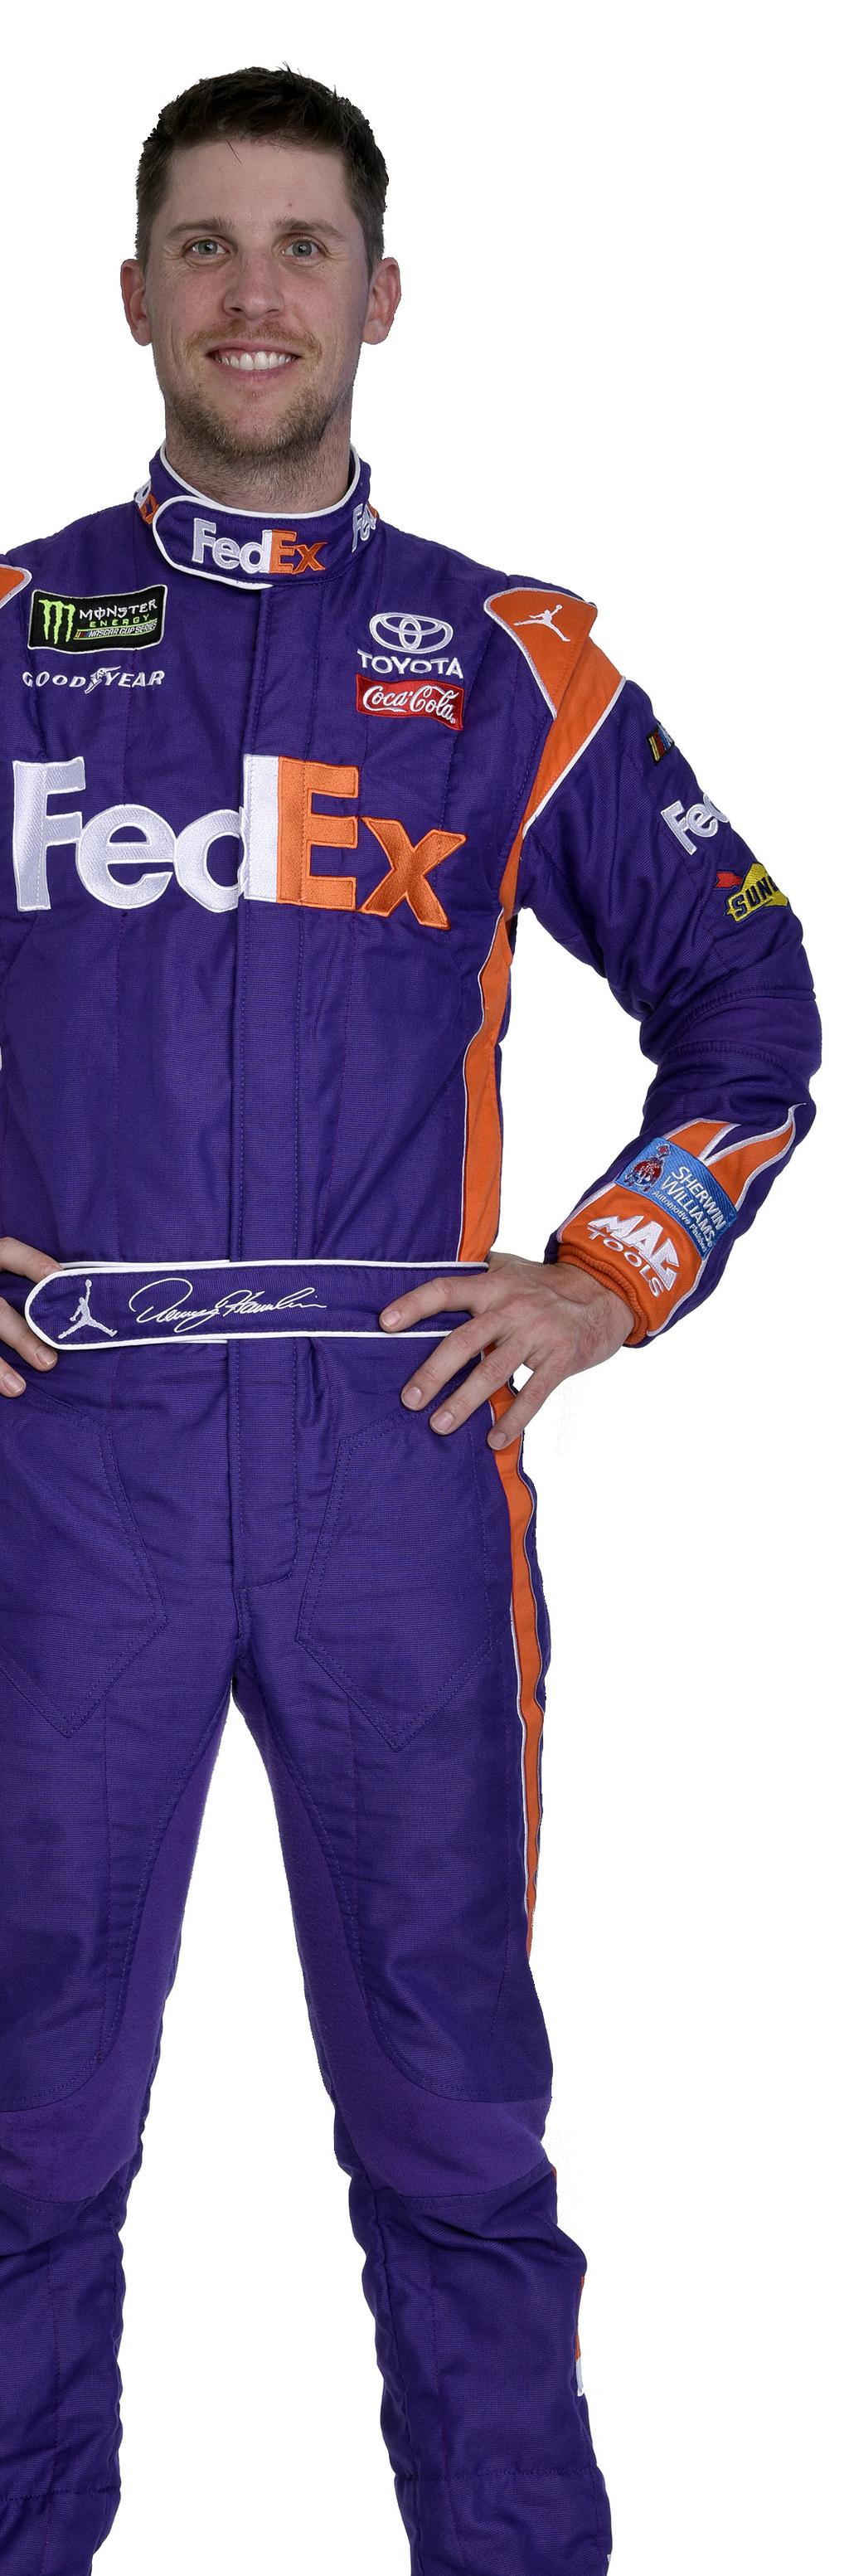 Denny Hamlin Biography Denny Hamlin Driver, #11 FedEx Toyota Ca